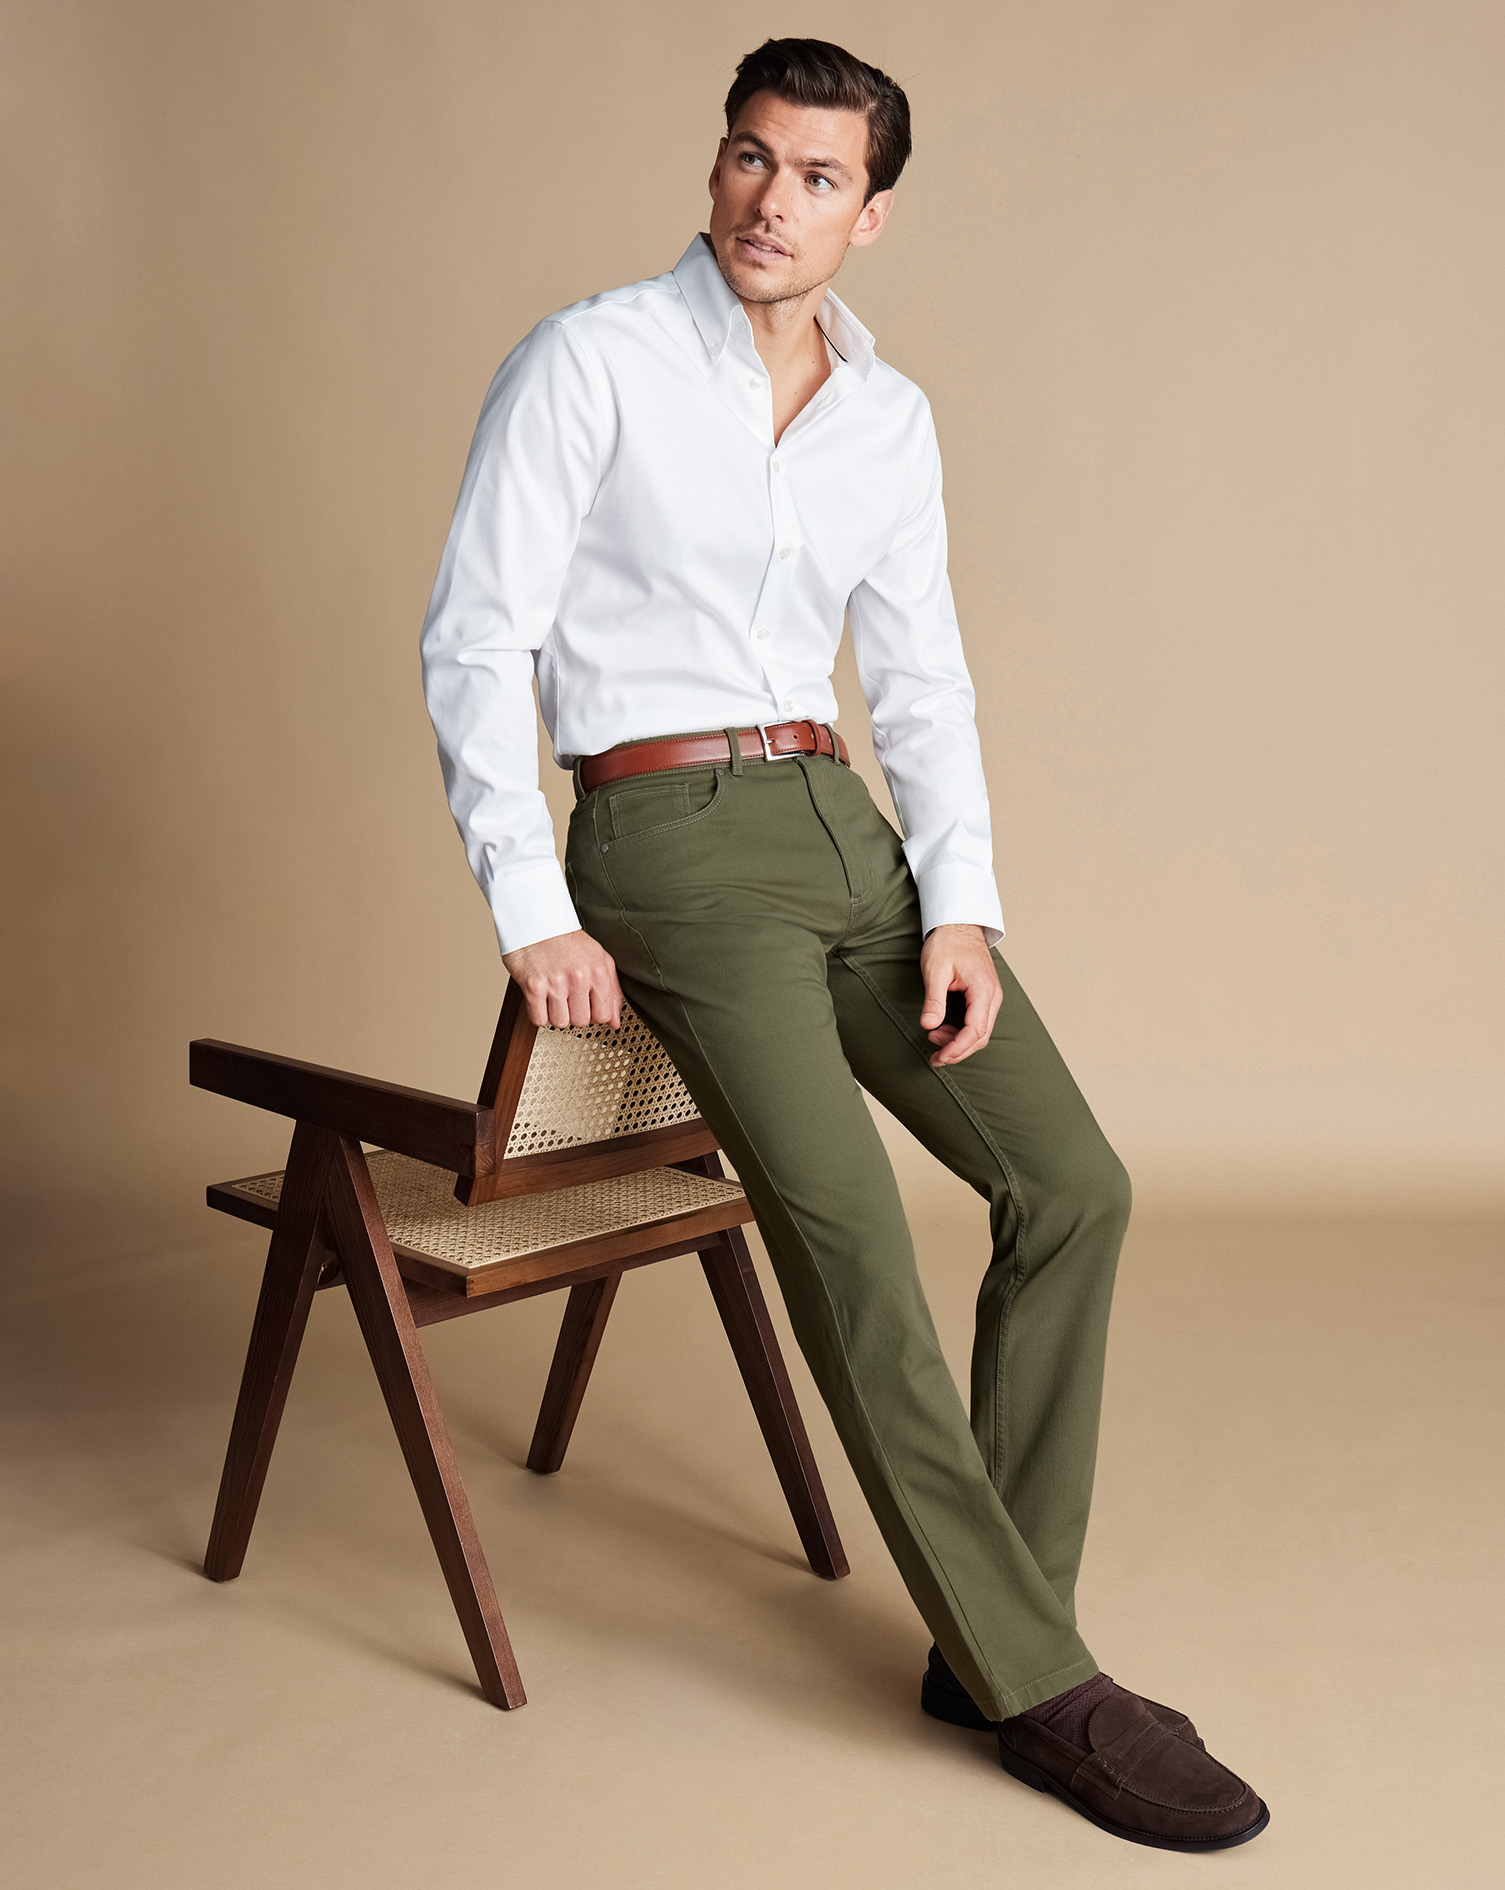 Men's Charles Tyrwhitt Twill 5 Pocket Jeans - Olive Green Size W34 L30 Cotton
